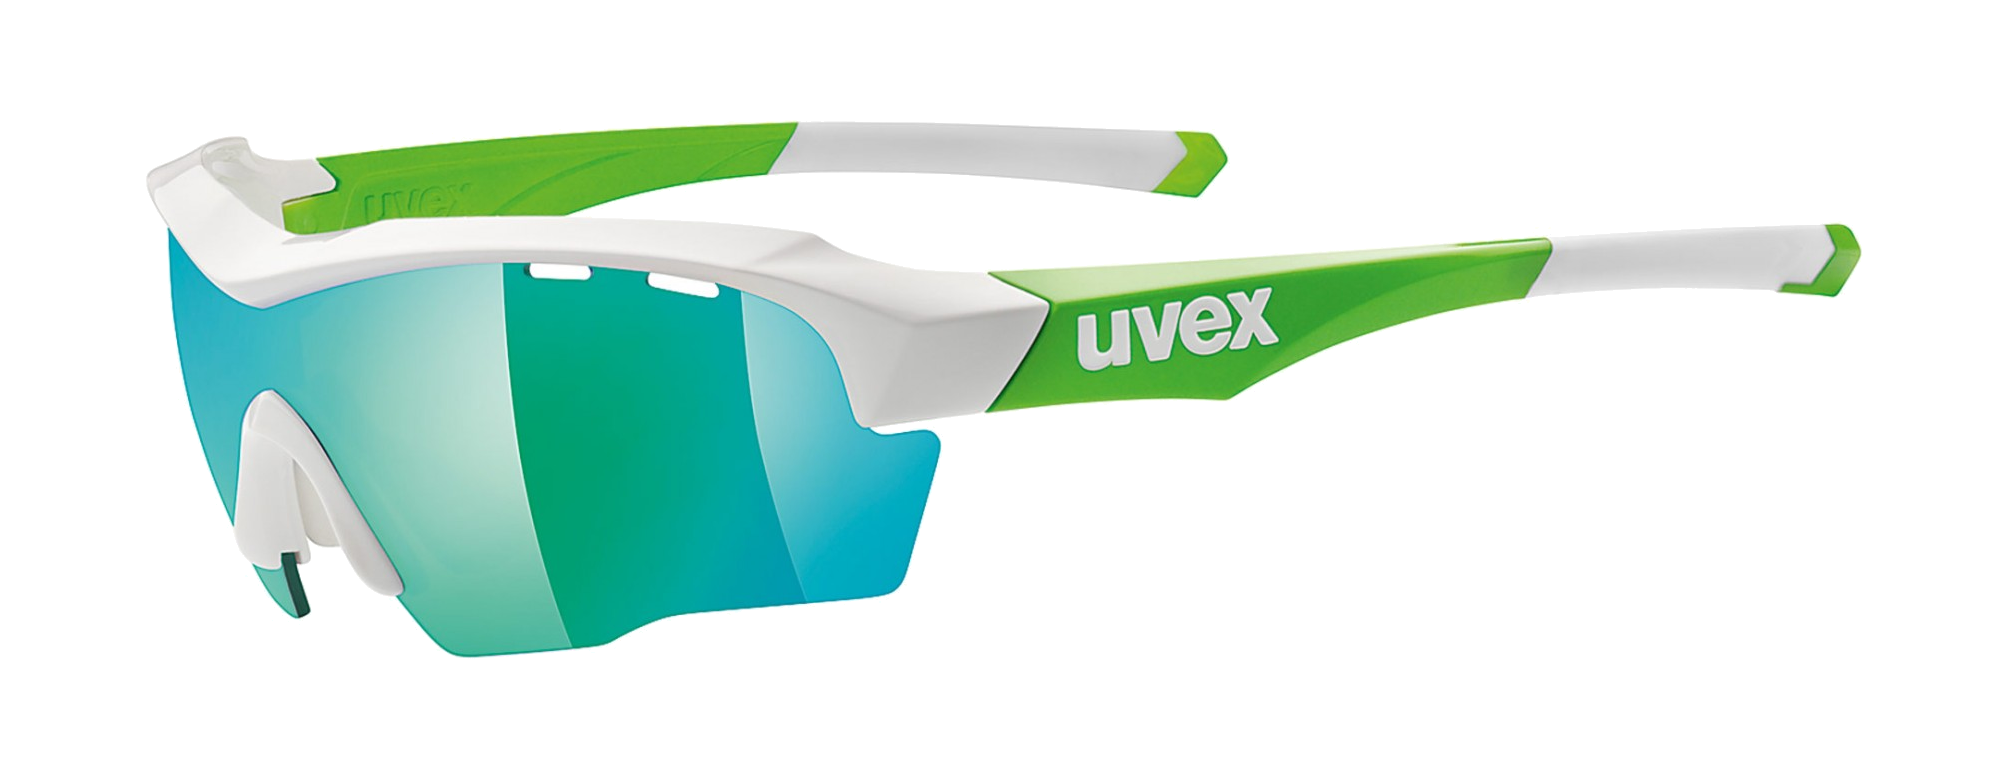 Uvex sport sunglasses PNG image